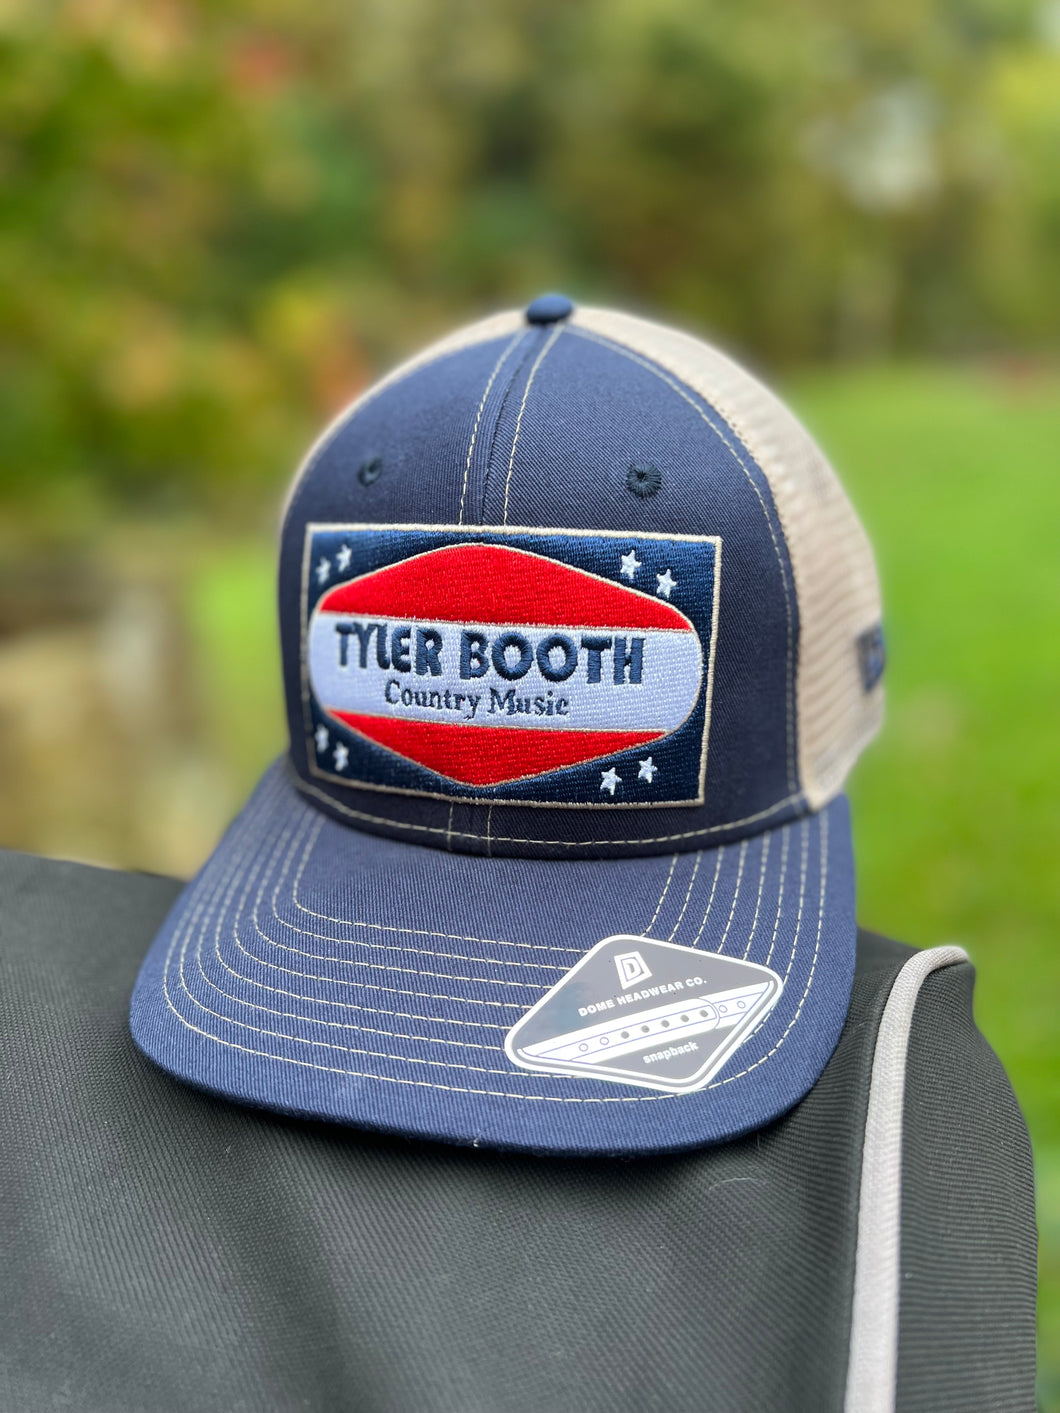 Tyler Booth Classic Trucker Hat